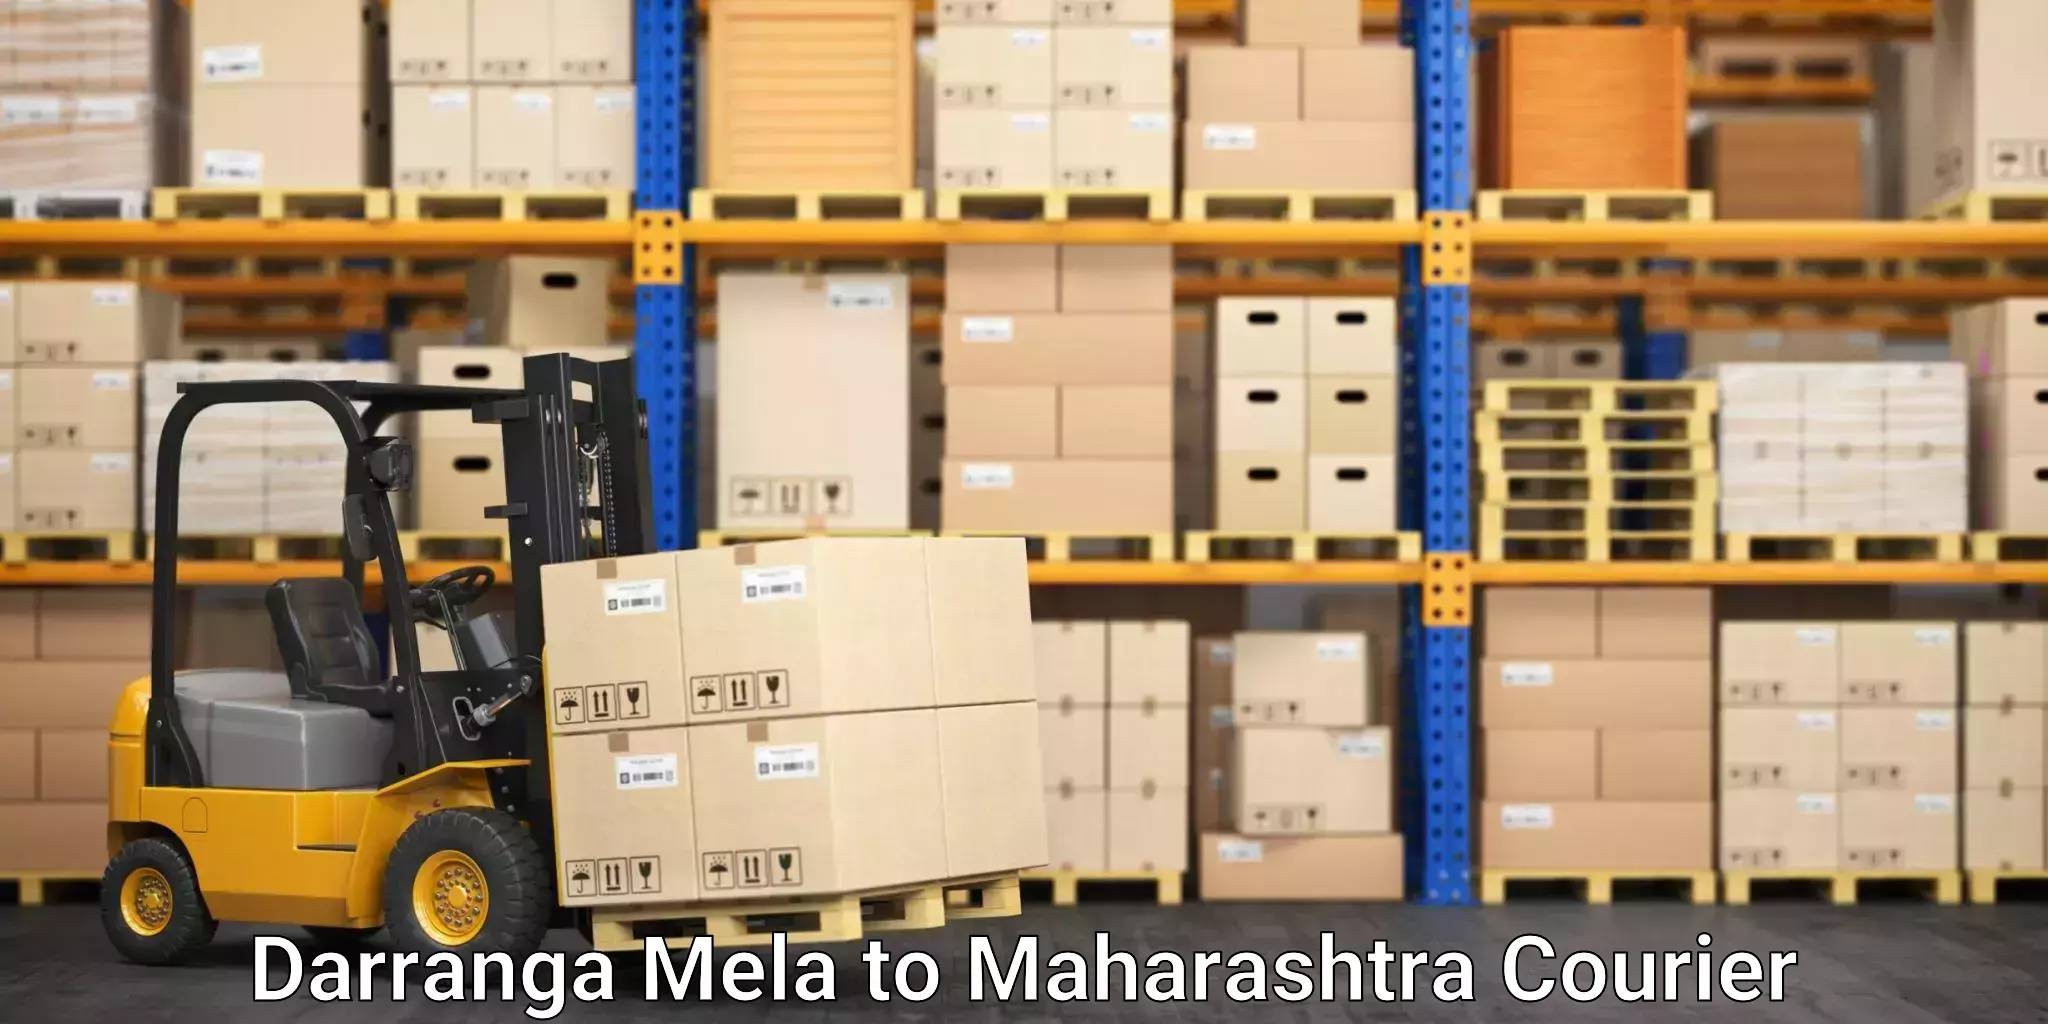 Affordable logistics services Darranga Mela to Brahmapuri